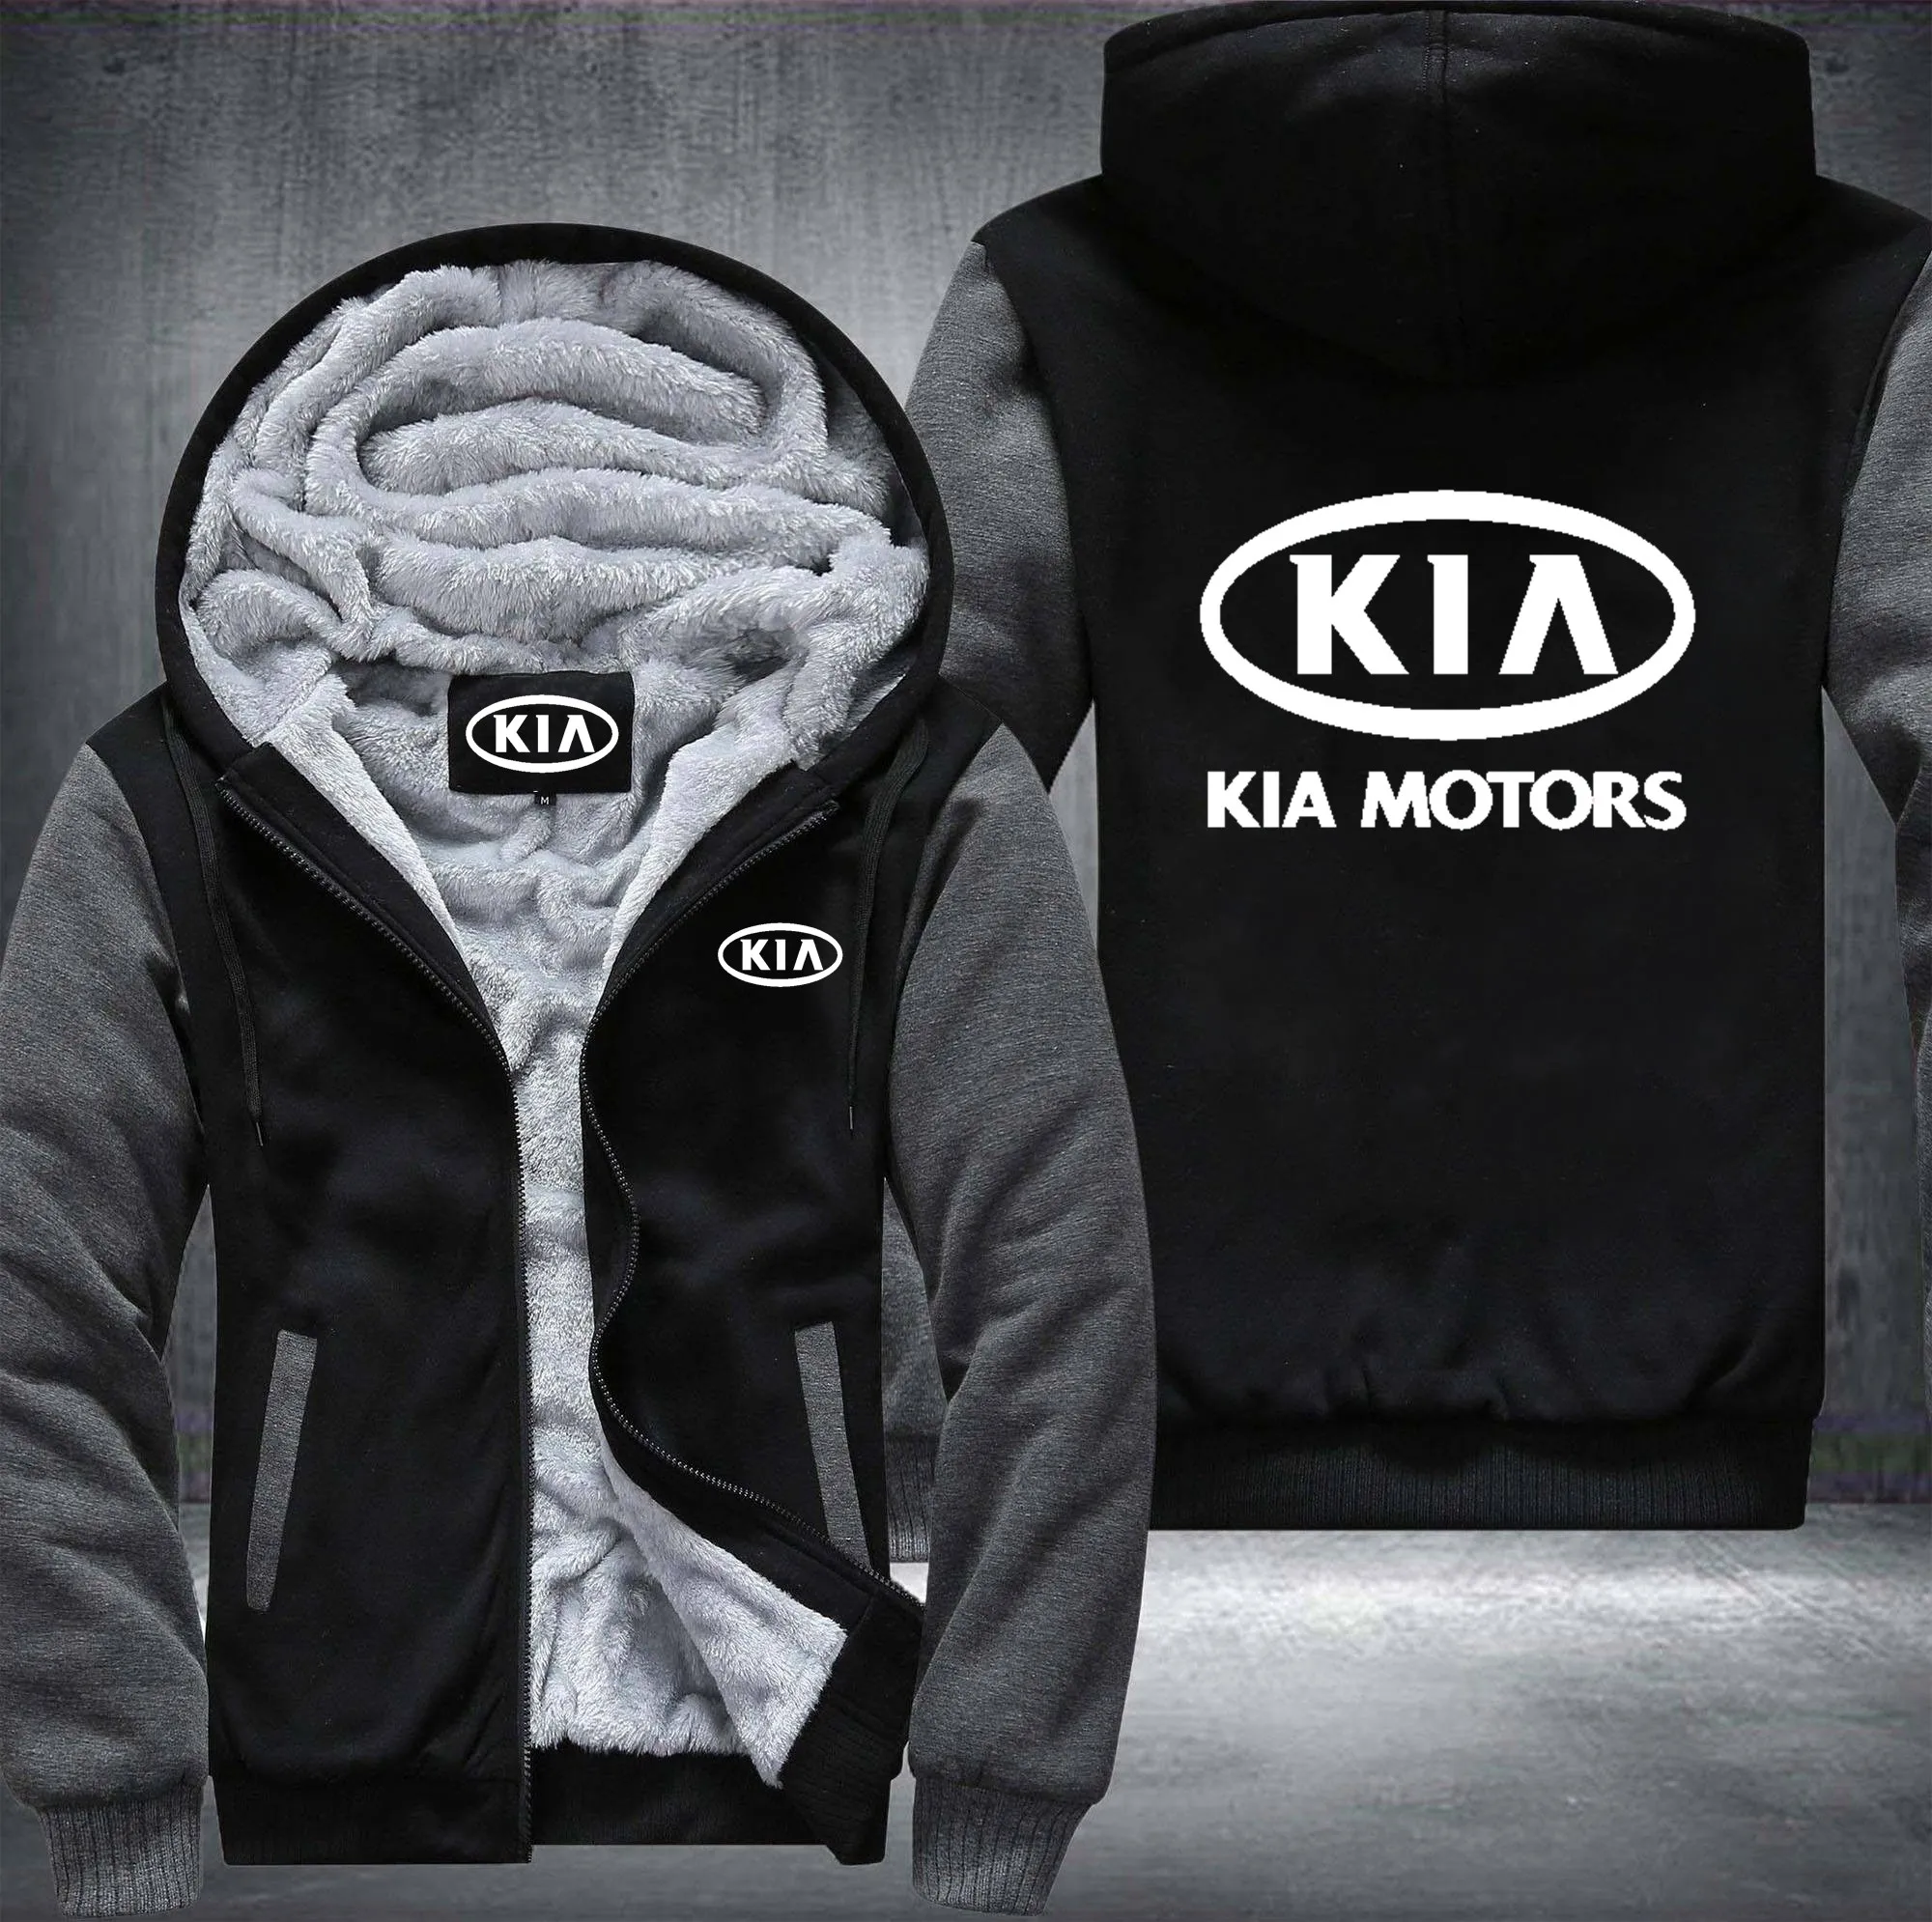 

New Winter Male Fashion Hoodies Warm KAI Motors Logo Jacket Sweatshirt Thicken Wool High Street Coat Zipper Hip Hop Loose Tops